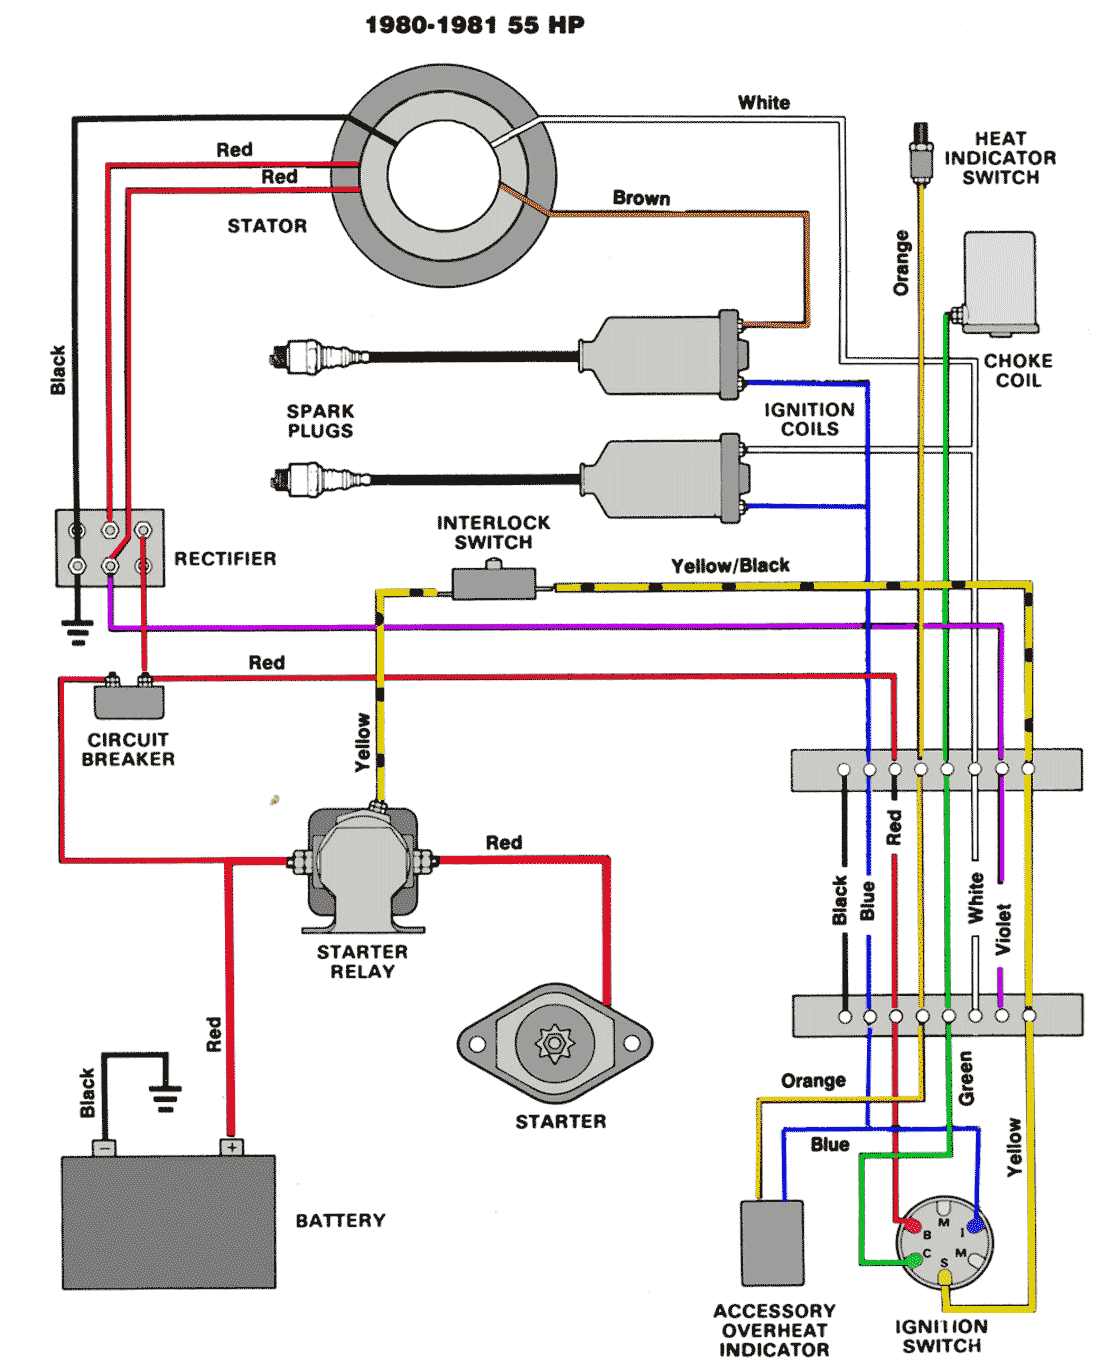 Chrysler electronic ignition diagram #2